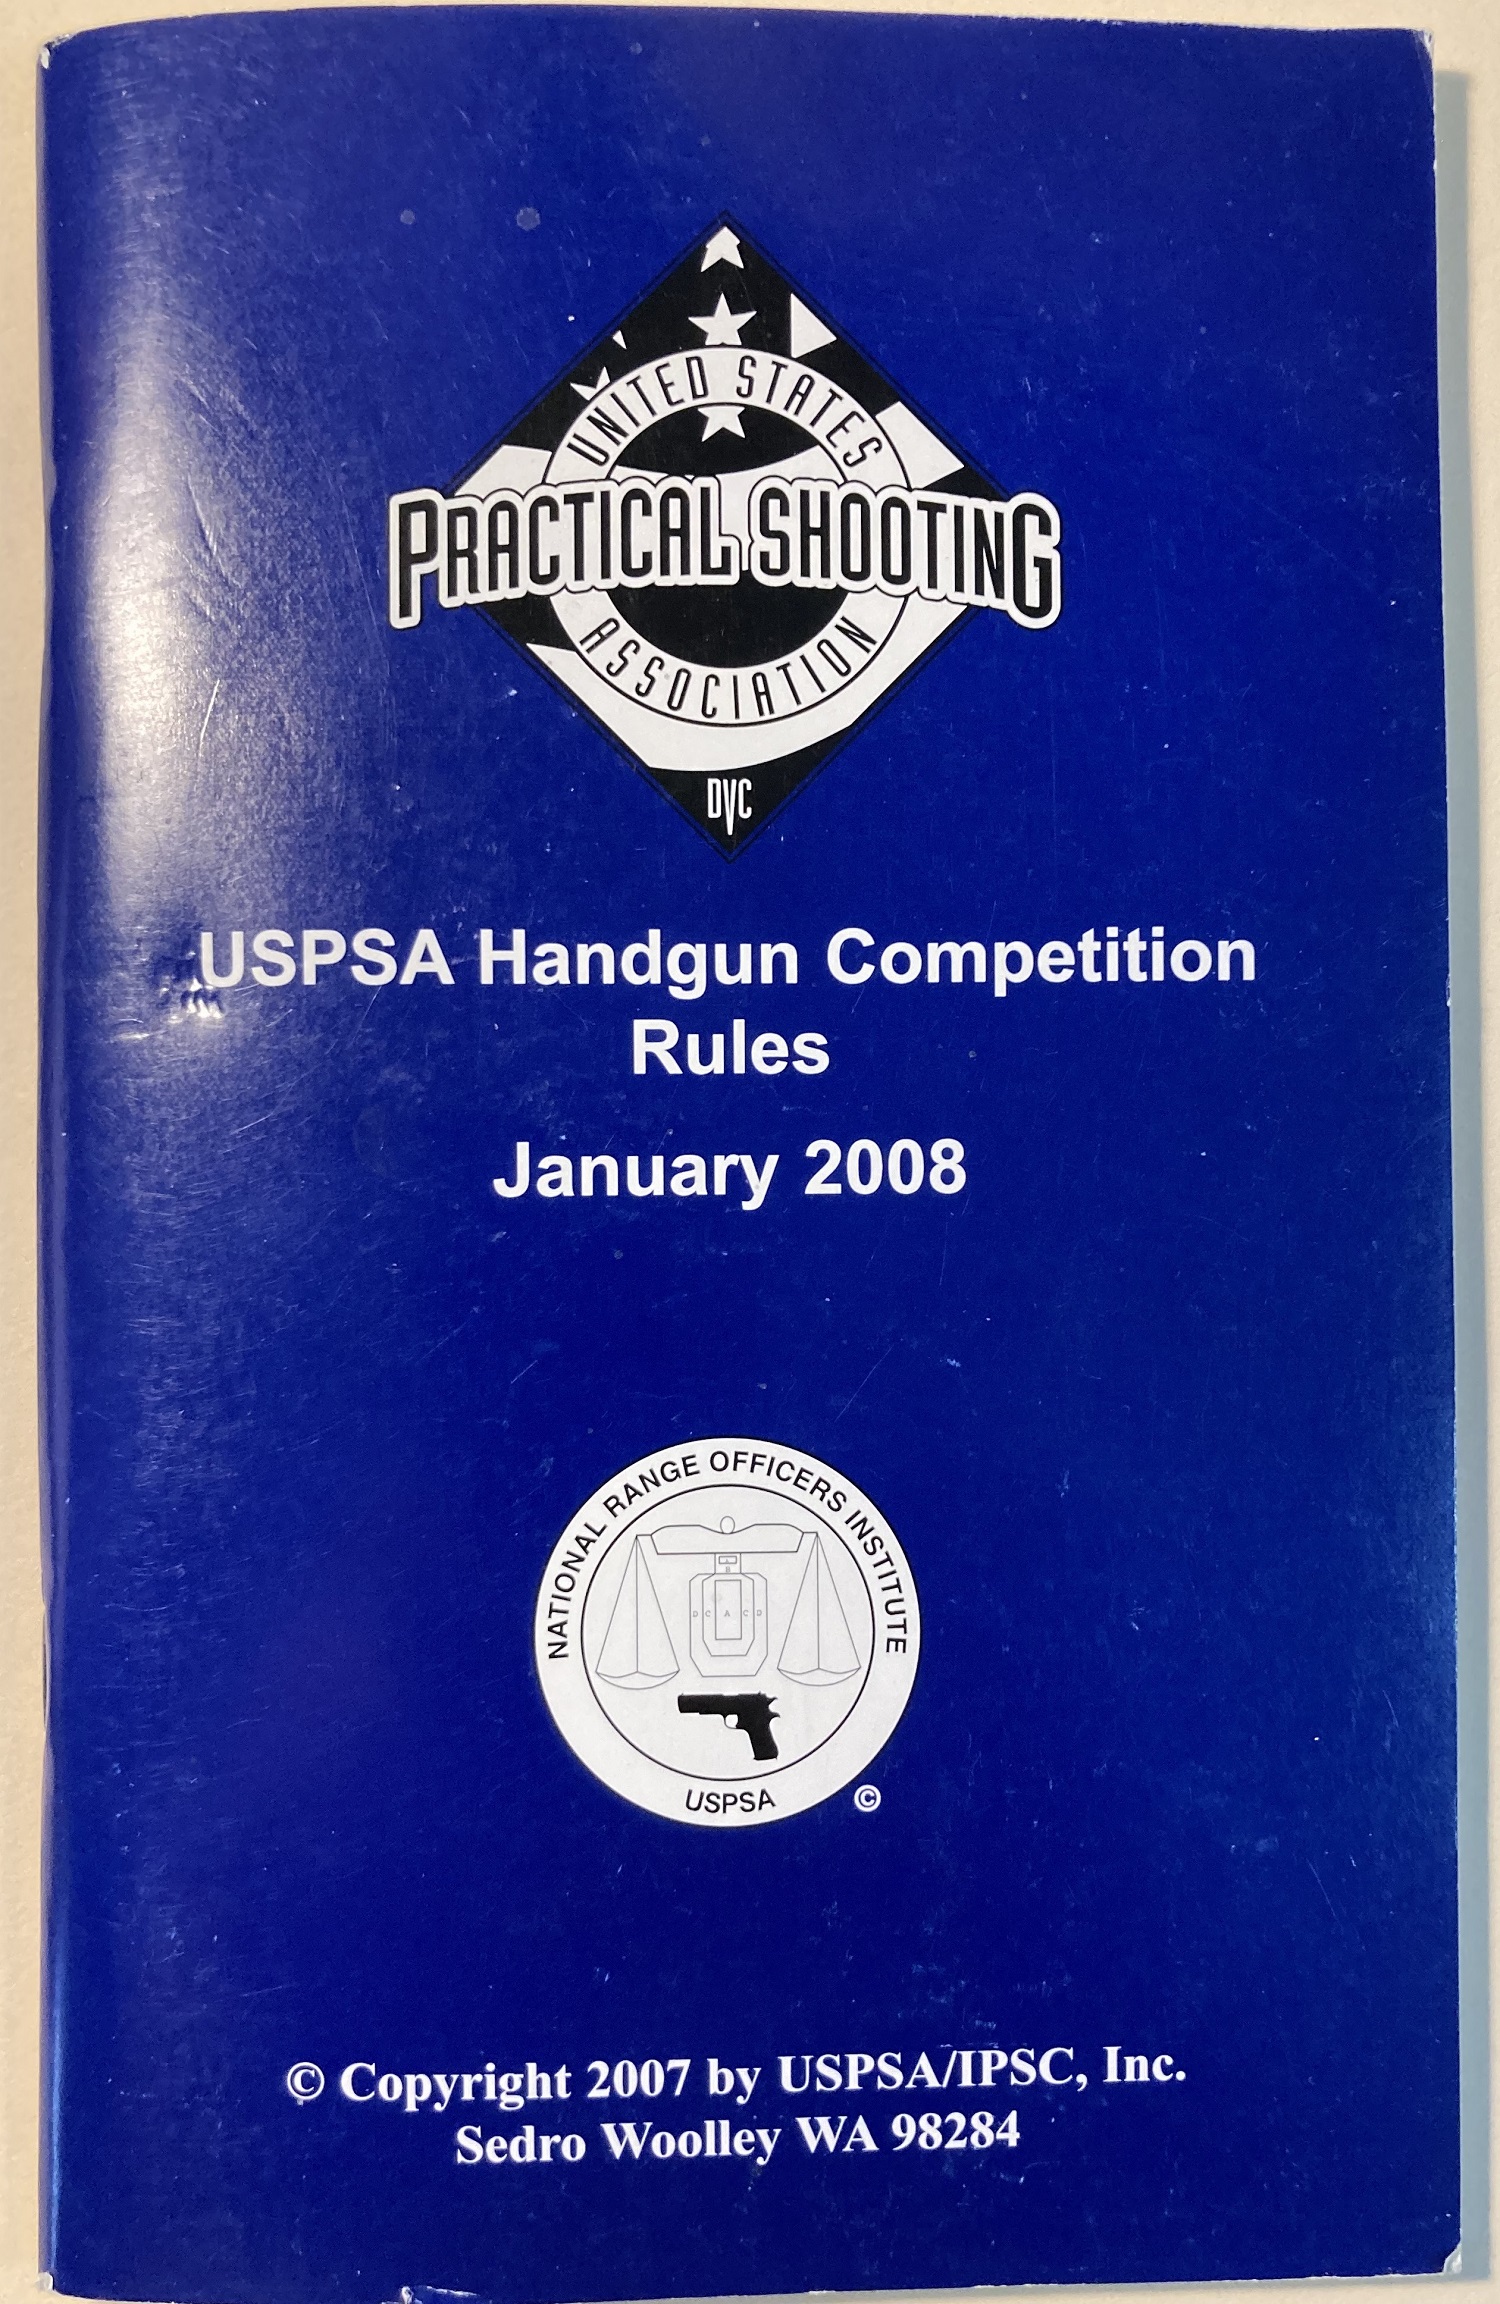 First USPSA rulebook